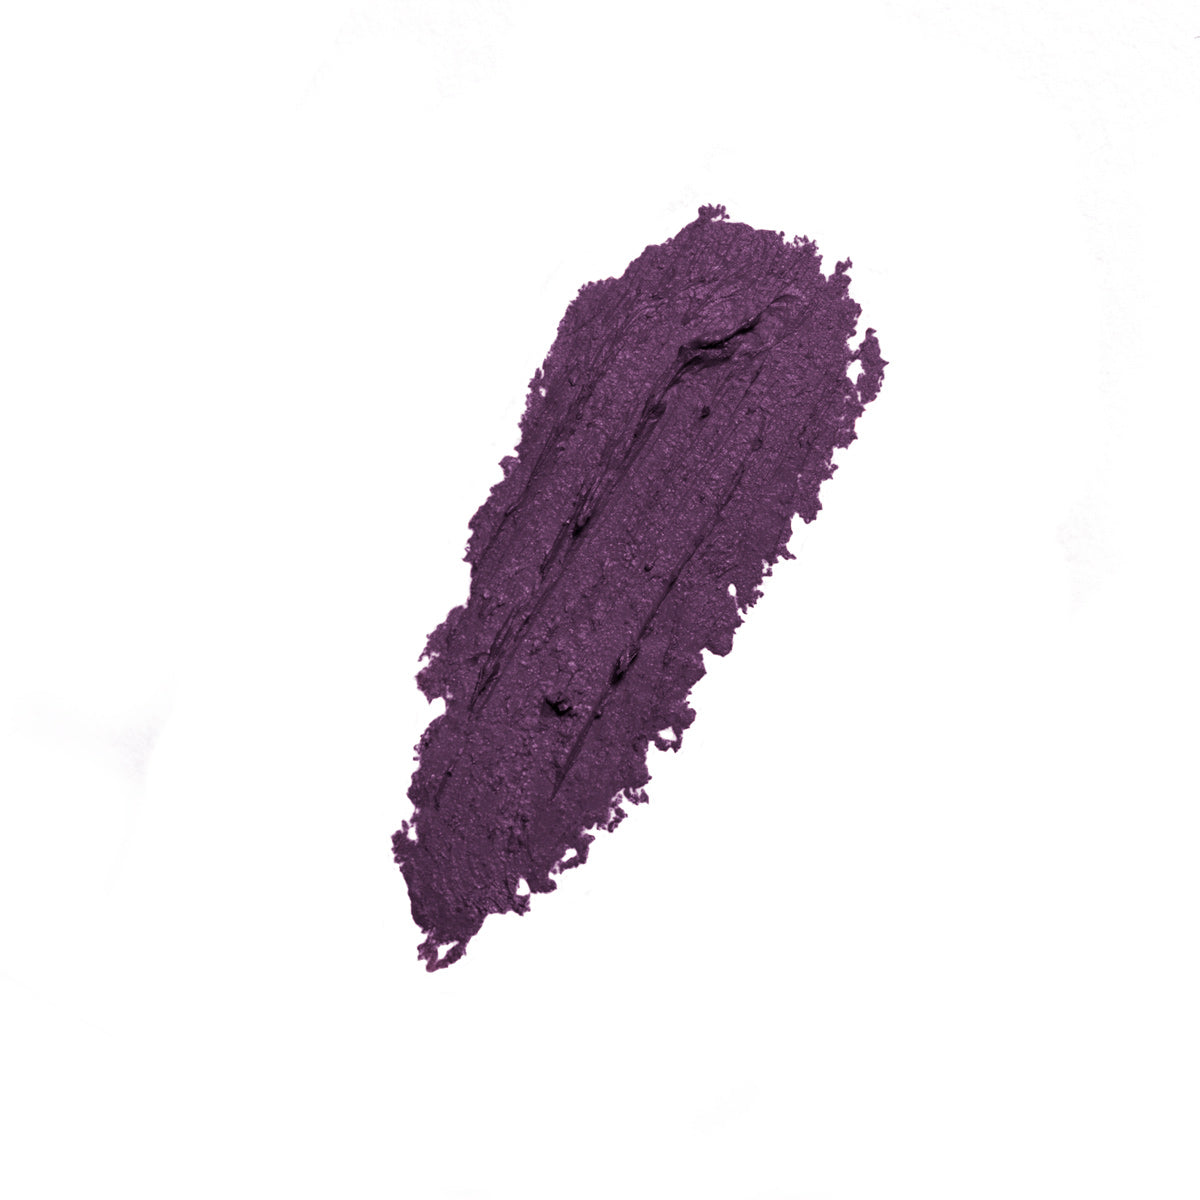 DEEP IN VOGUE - DEEP VIOLET - long-wearing matte finish lipstick in royal purple shade